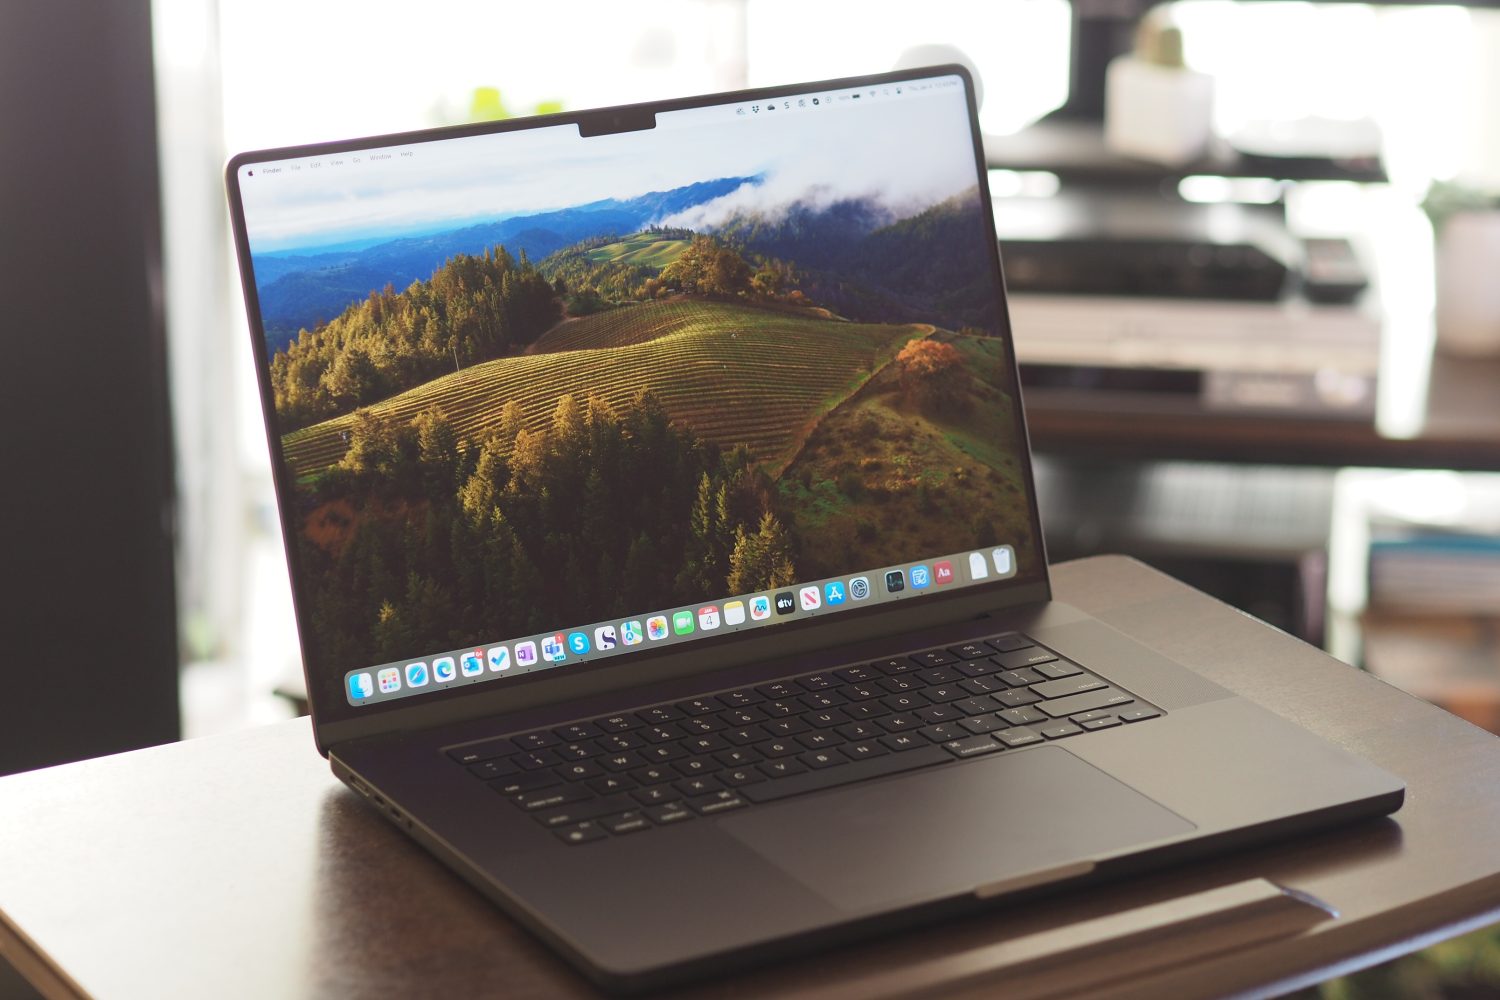 Mac Studio review: can it replace my Windows desktop PC?